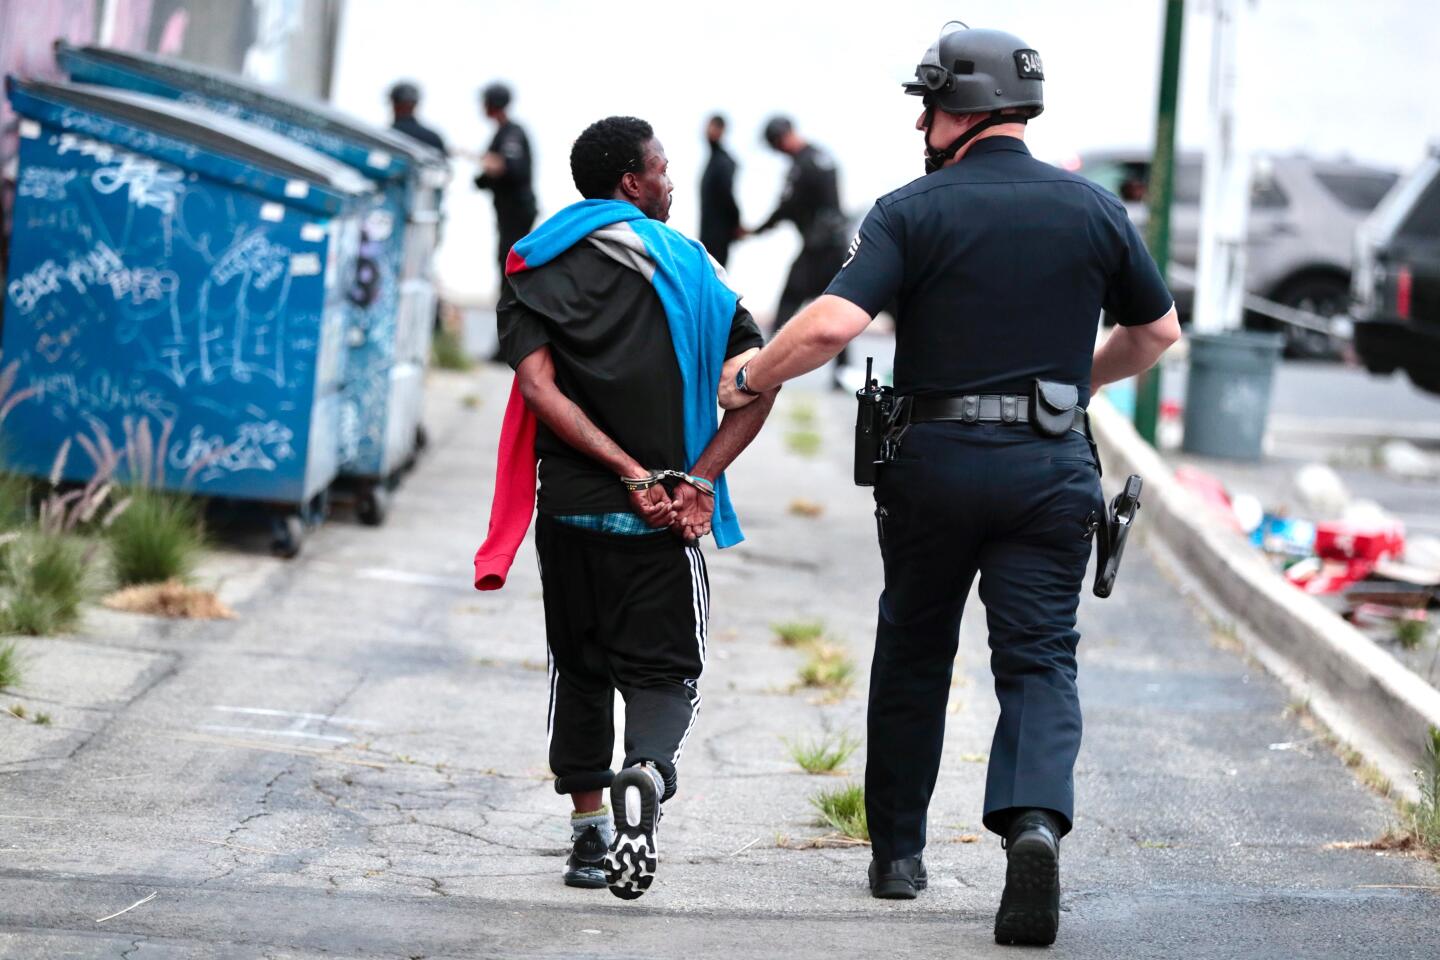 Unacceptable': SF Mayor, Police Chief Respond After Looting